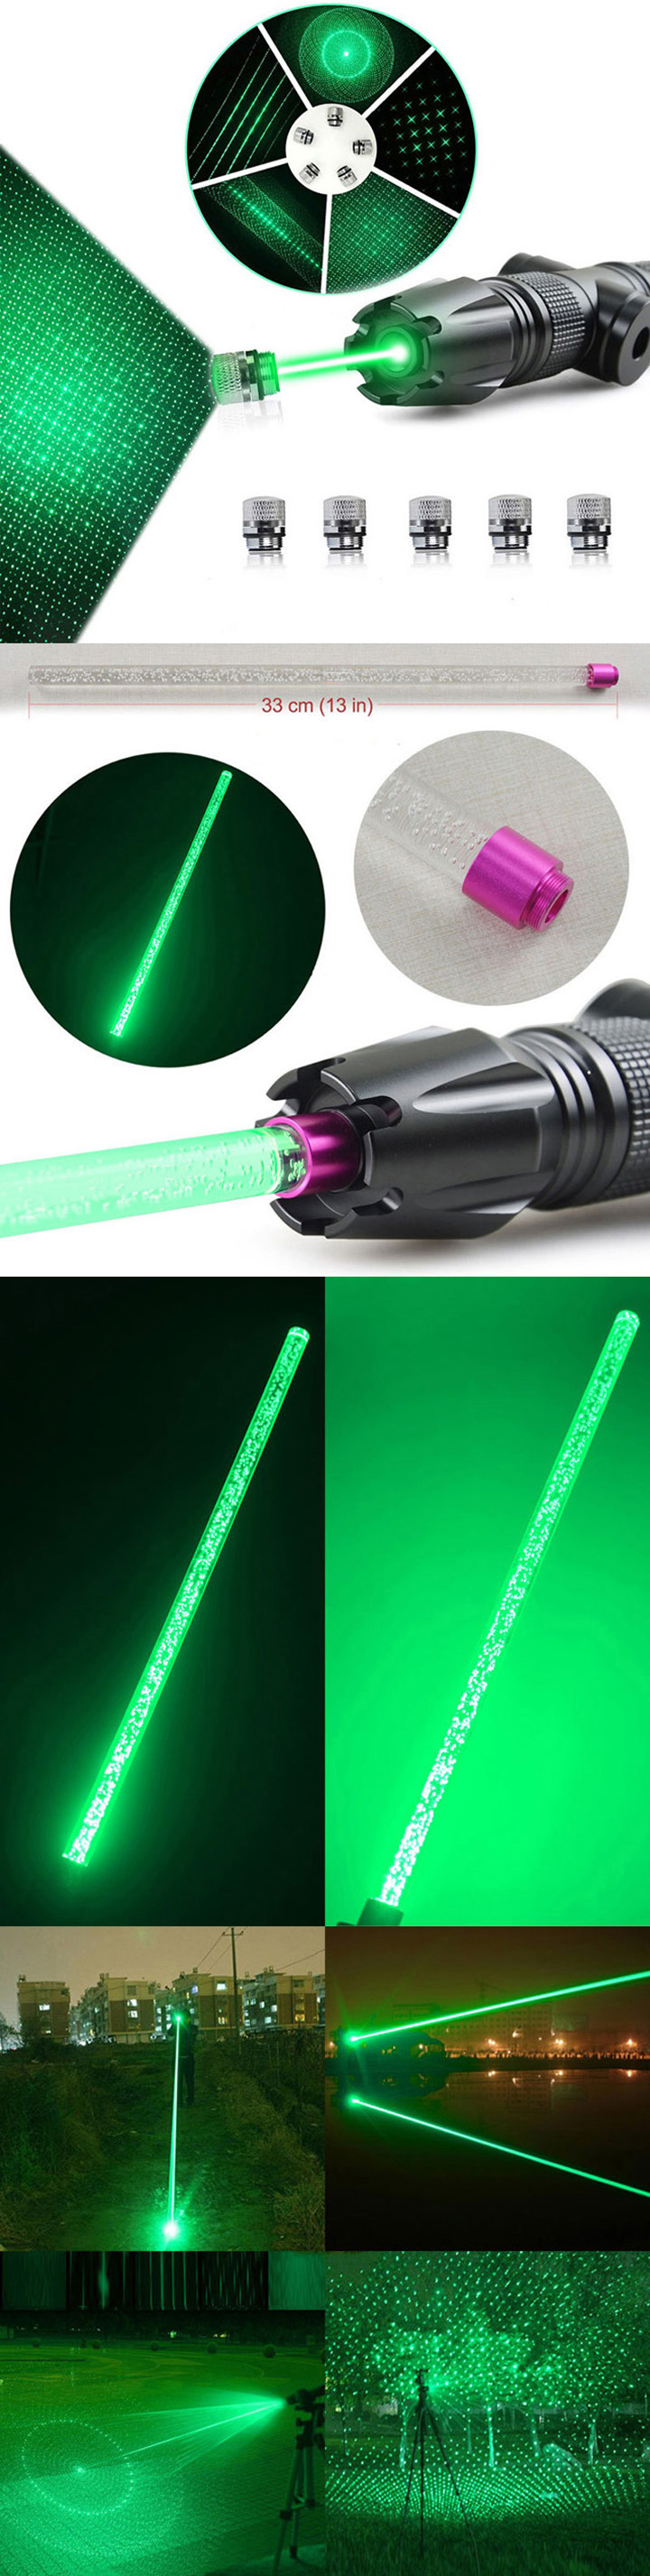 Puntatore laser verde più potente al mondo